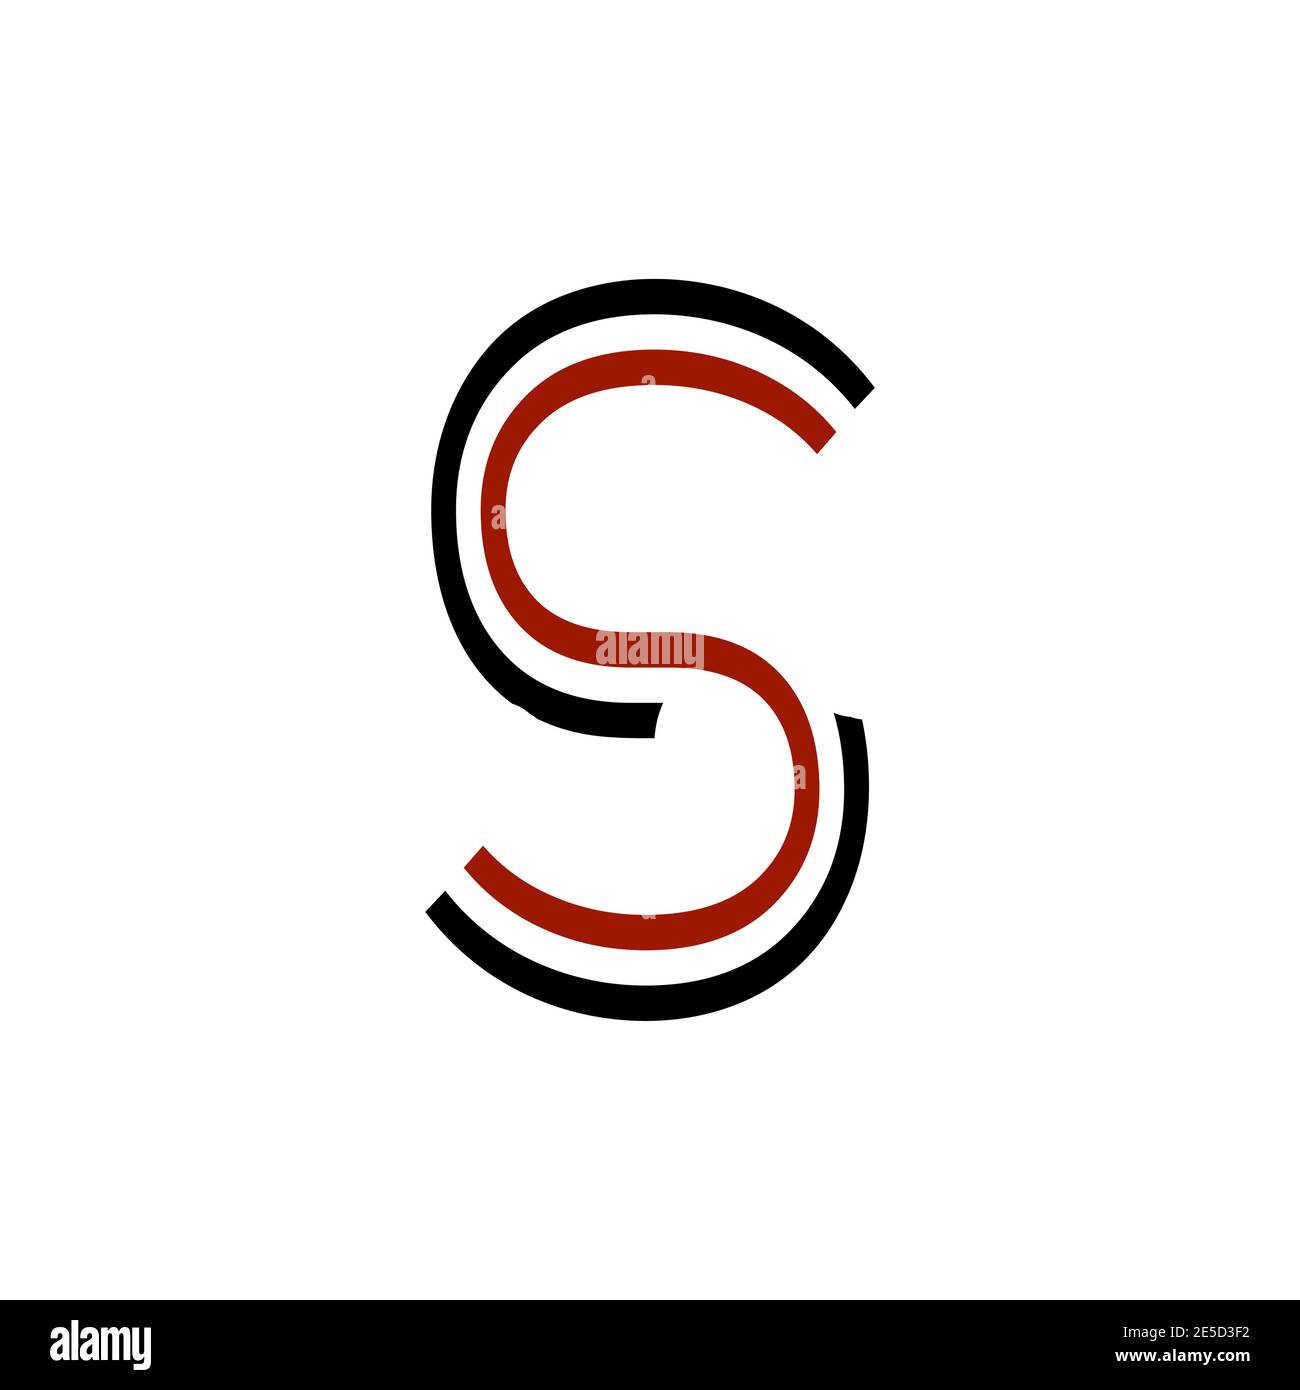 ss, csc, s, scc initials line art geometric company logo Stock Vector